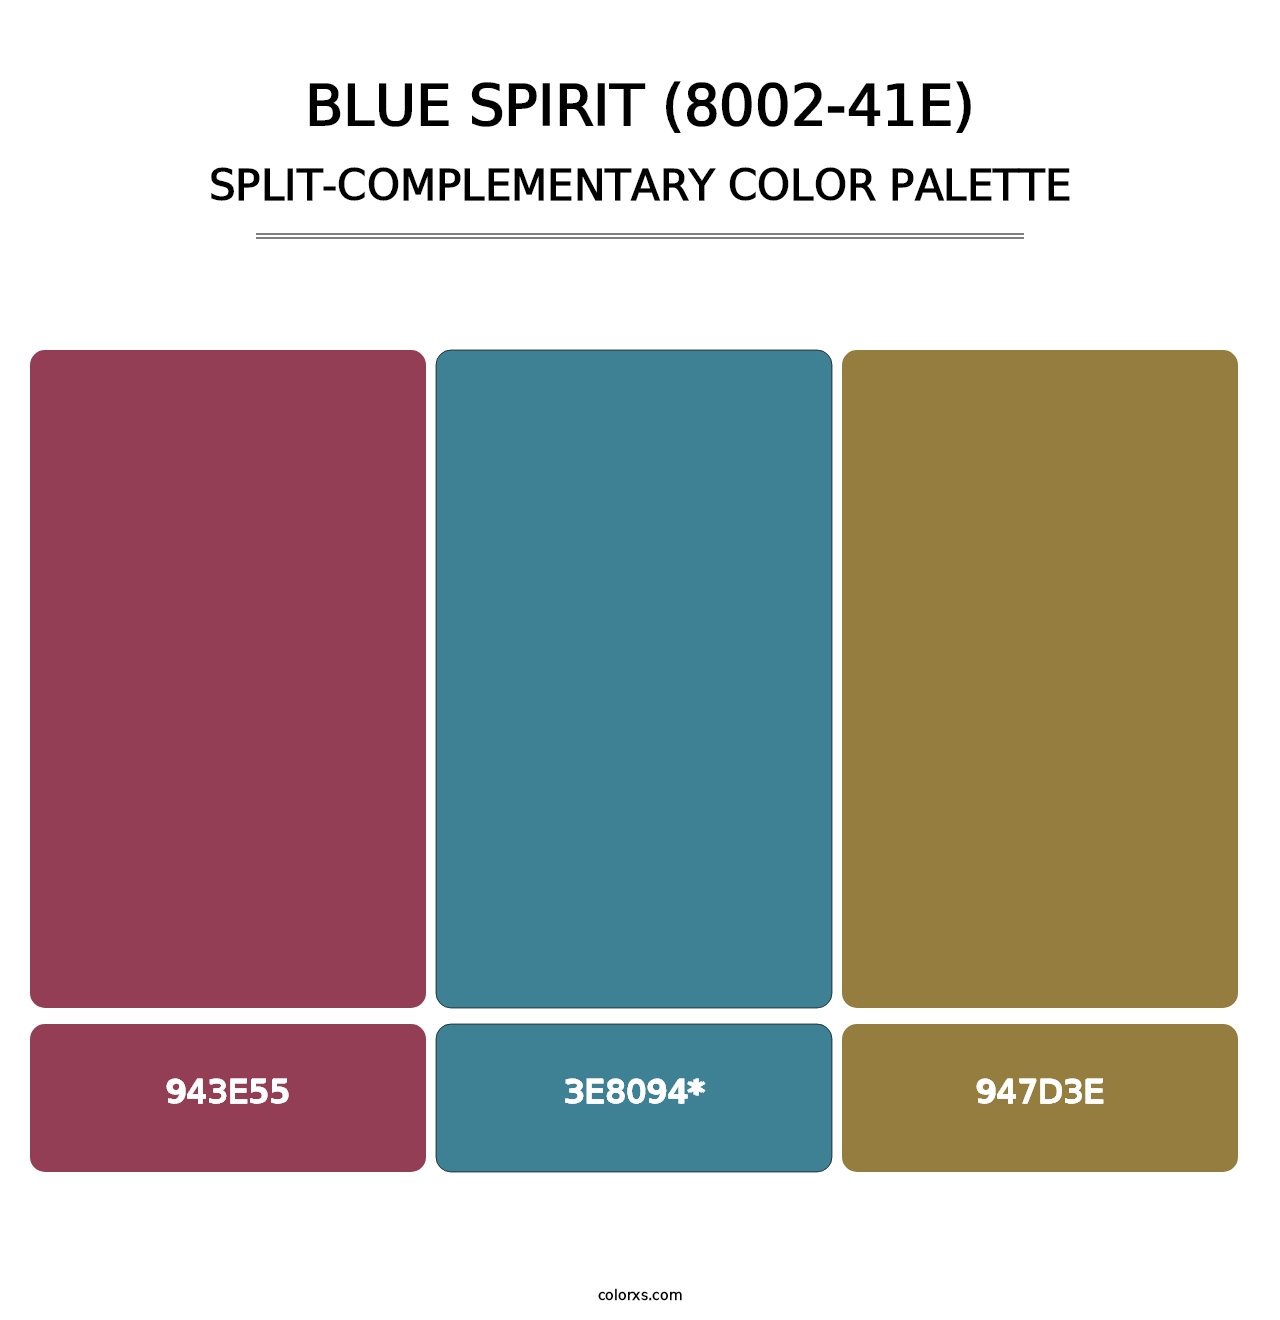 Blue Spirit (8002-41E) - Split-Complementary Color Palette